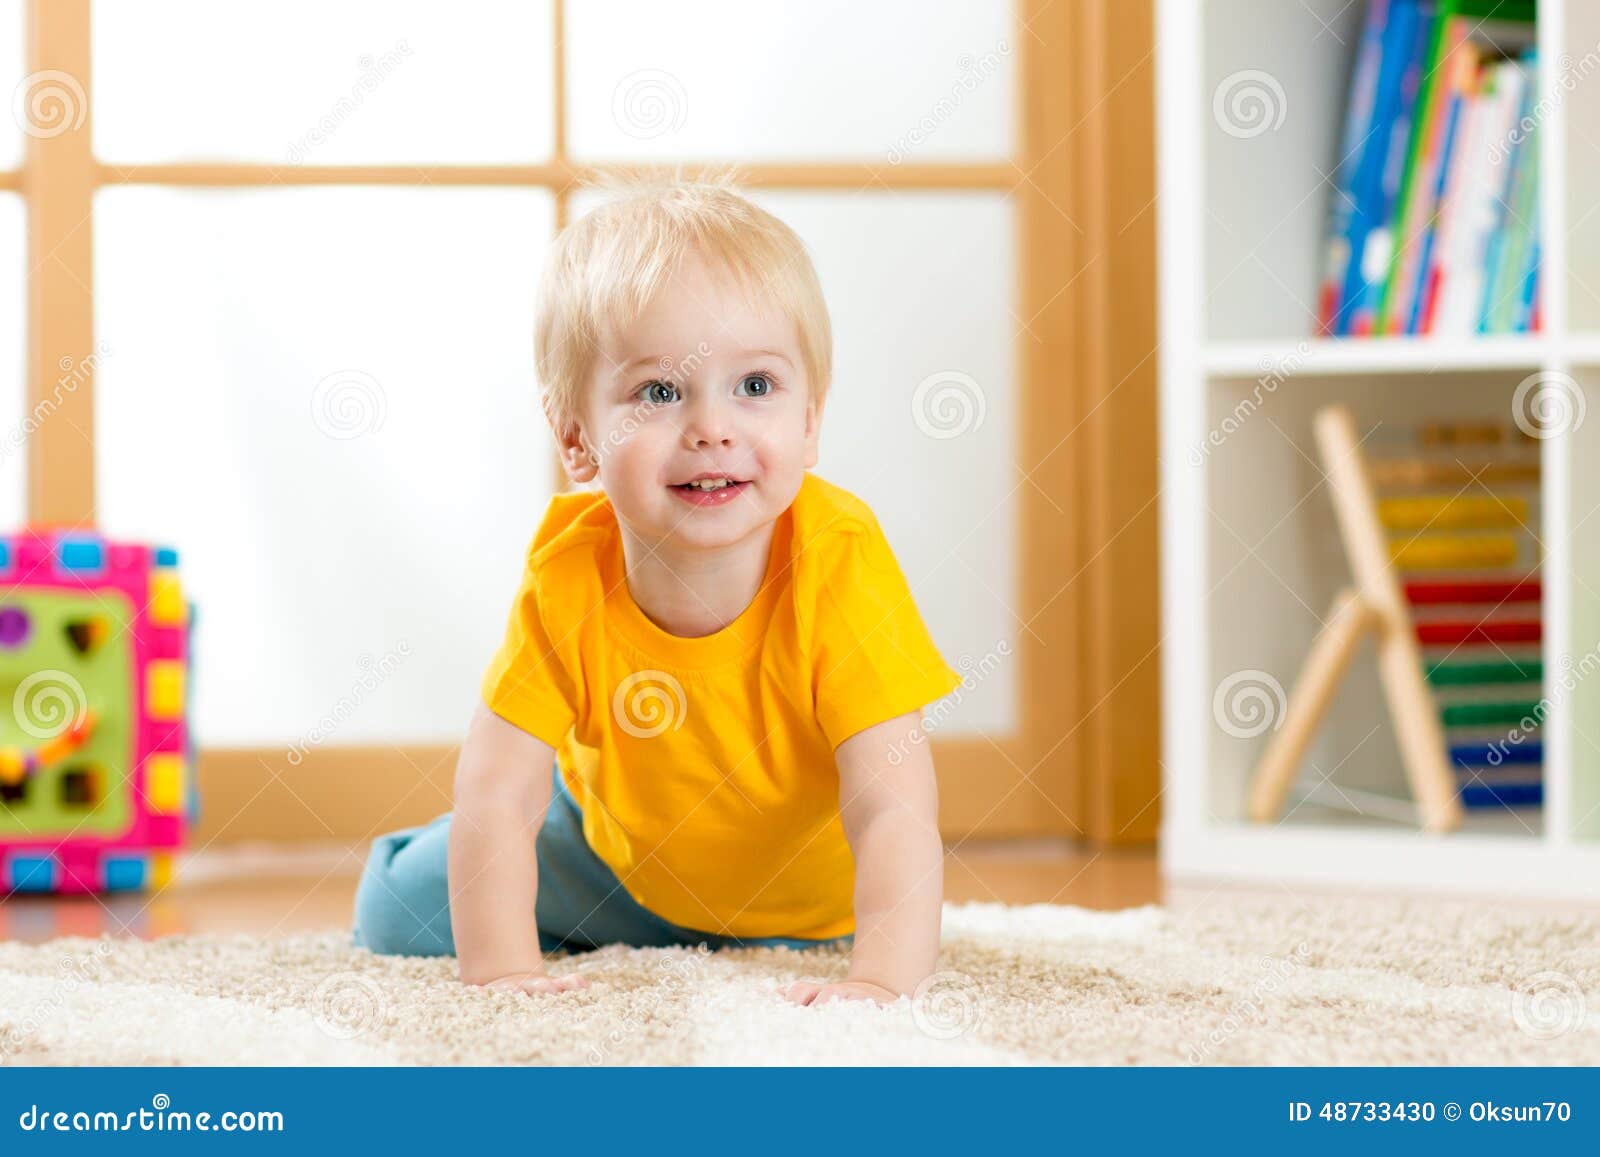 crawling baby boy indoors